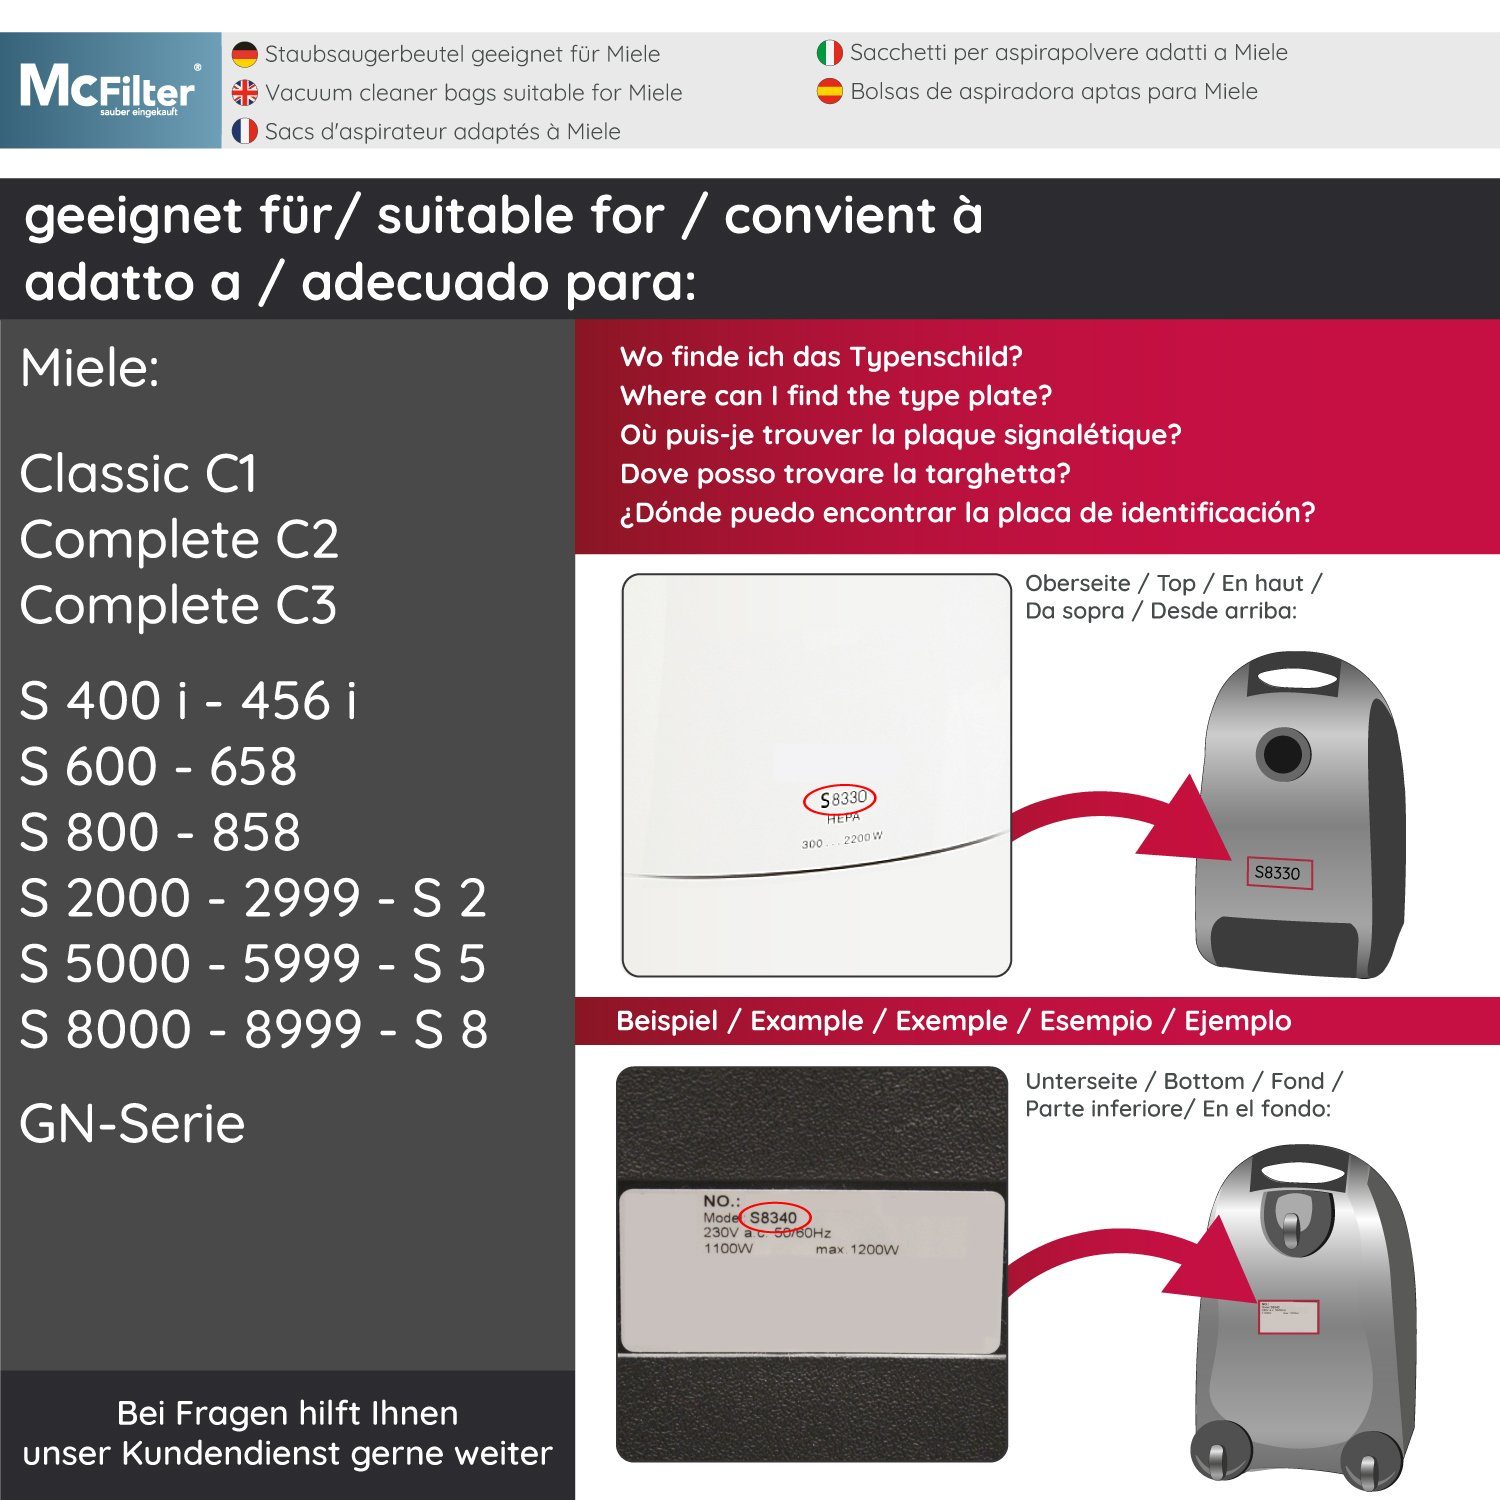 McFilter Staubsaugerbeutel >MAXI BOX< S600 Miele S658 zu Staubsauger, - 9917730, Filter, Alternative wie 8 16 Serie für inkl. 10408410 (16+8), Miele passend St., Top